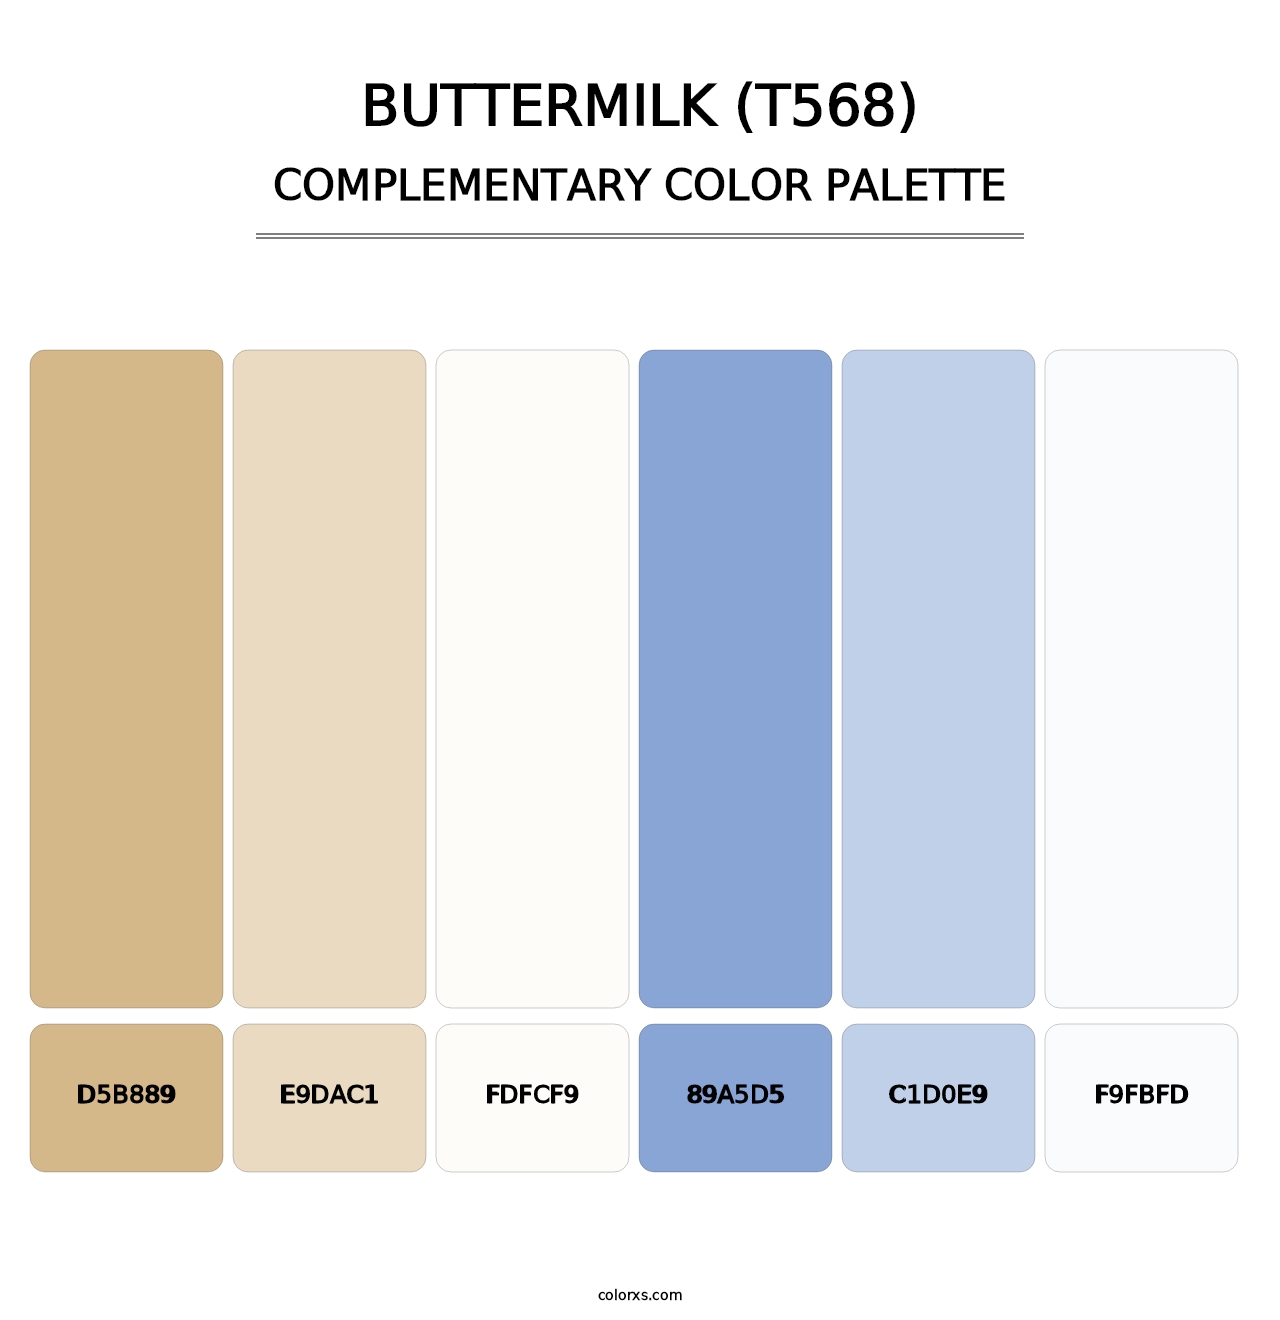 Buttermilk (T568) - Complementary Color Palette